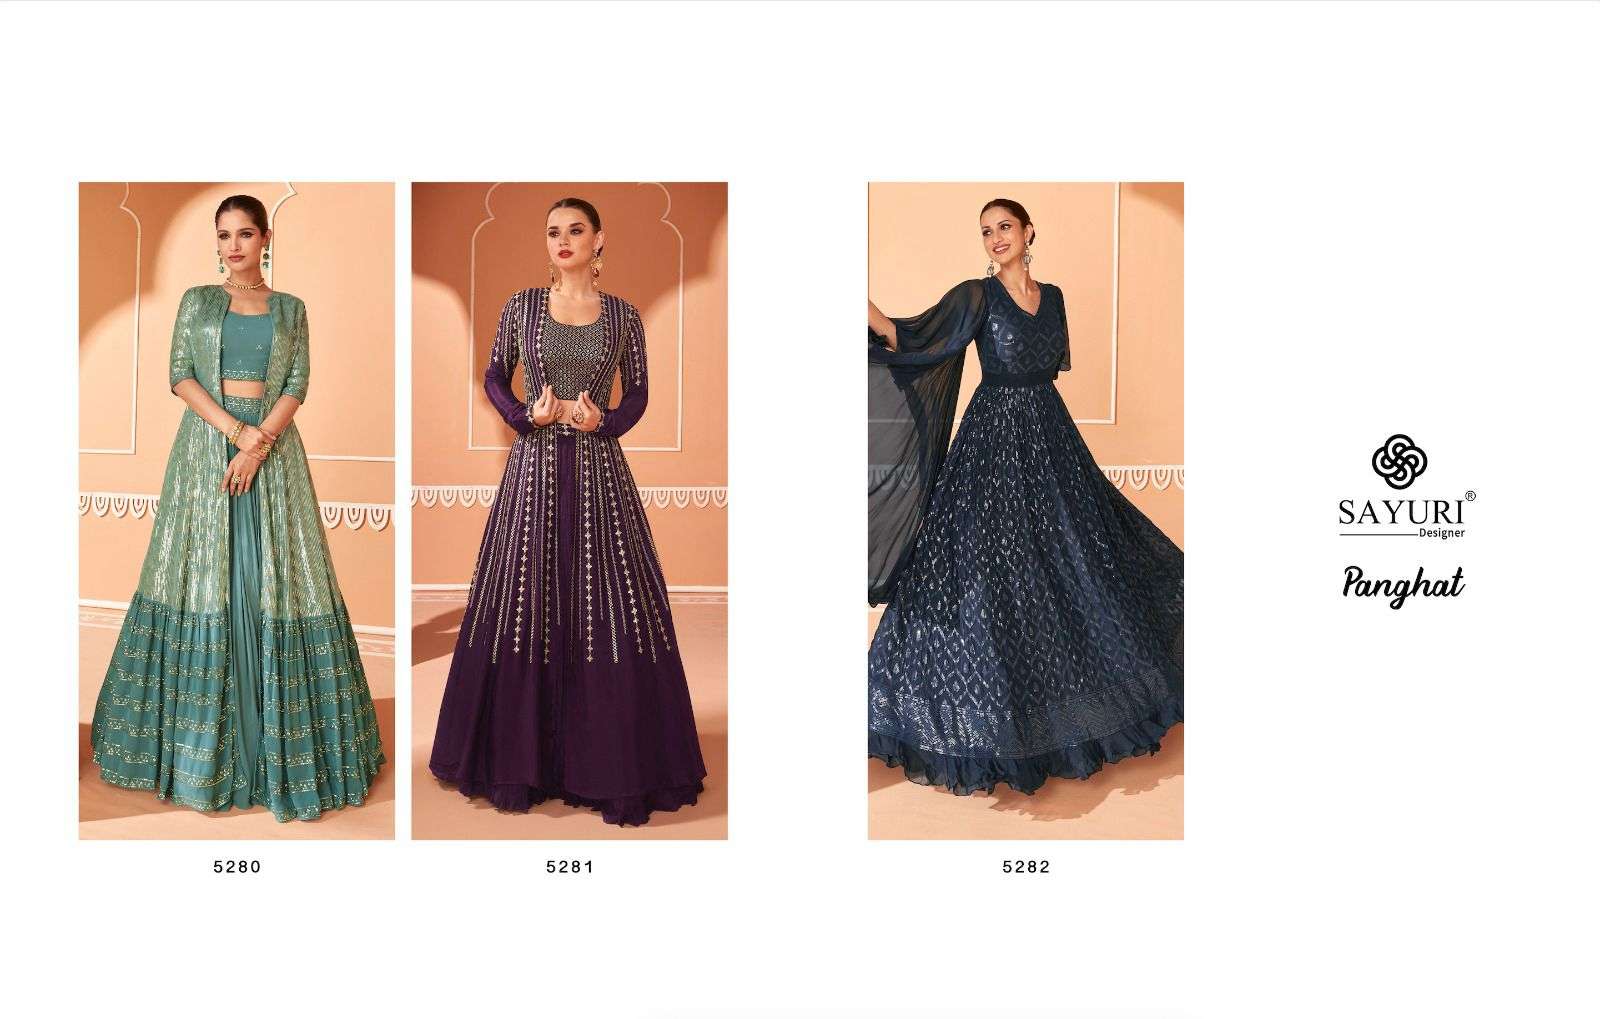 SAYURI DESIGNER PANGHAT Kurti Long Gown Wholesale catalog